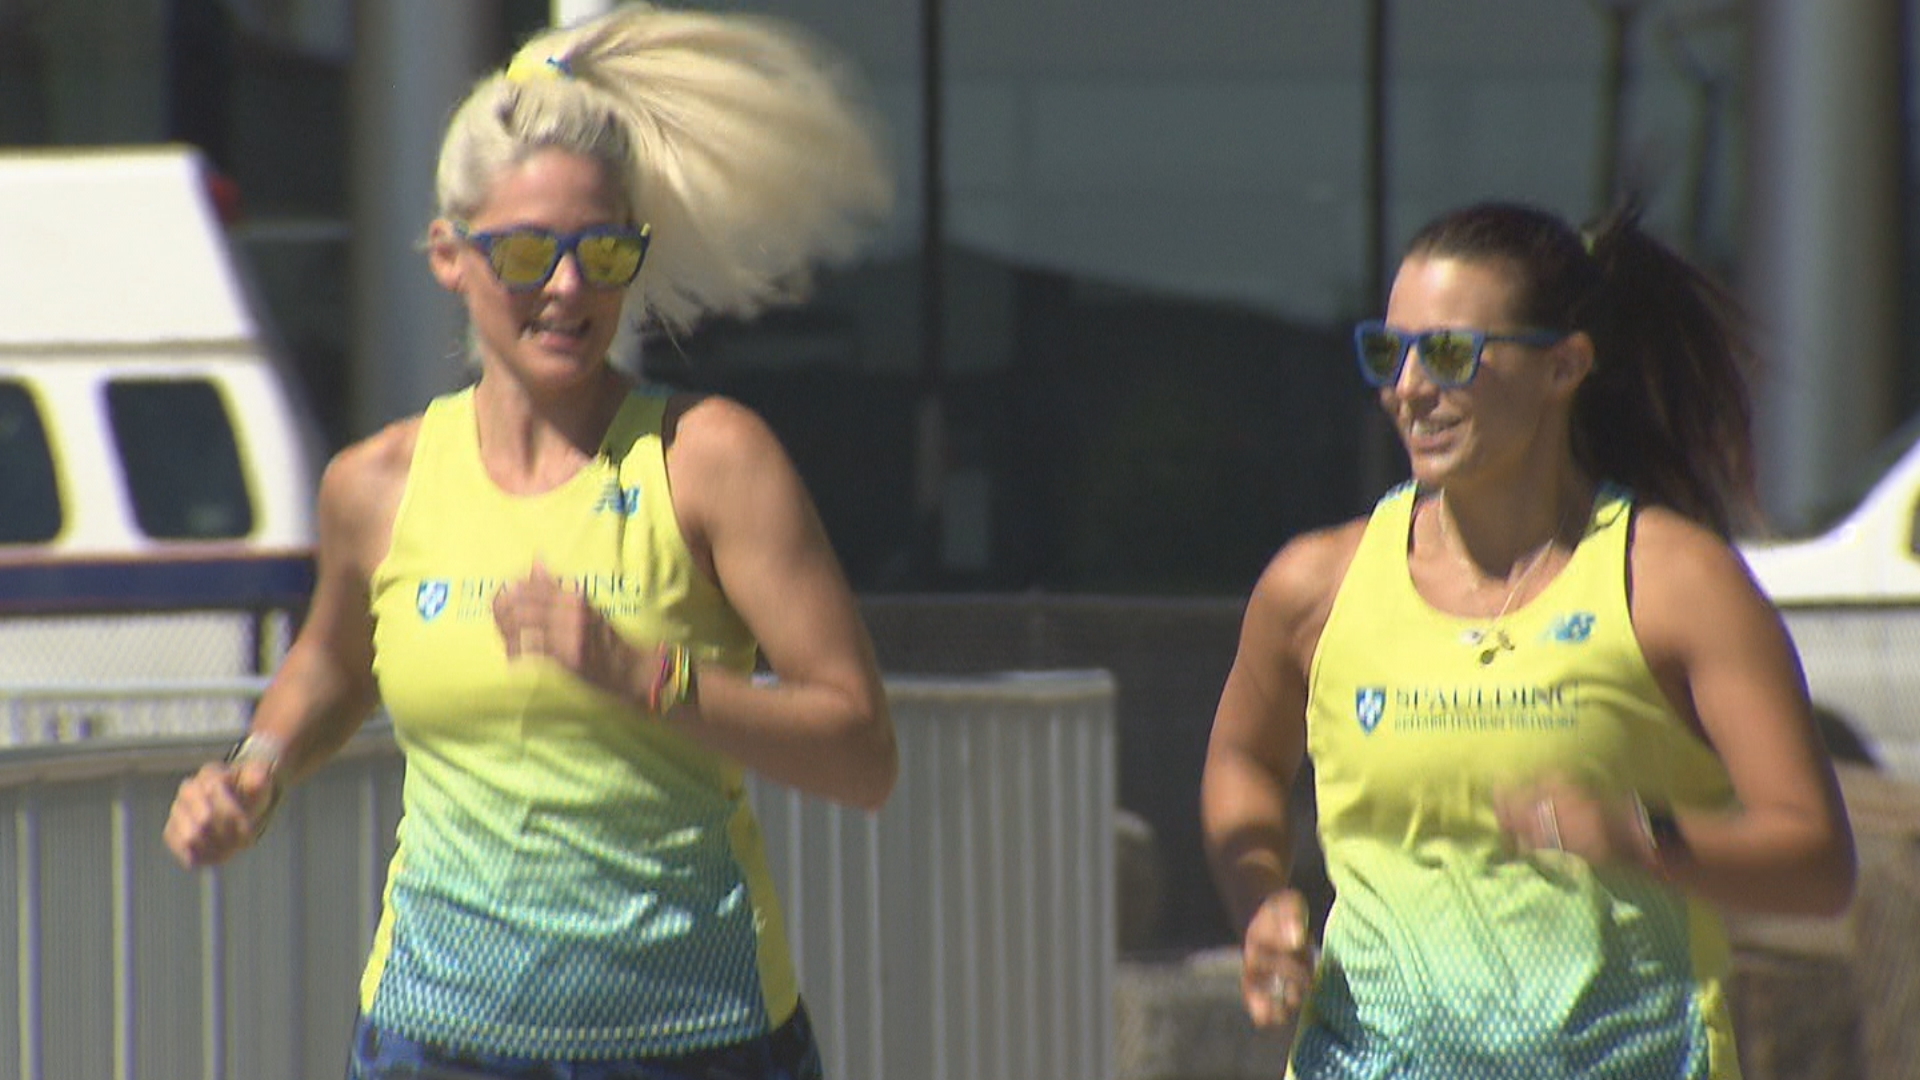 Runners Adjust Training In Summer Heat Ahead Of October Boston Marathon